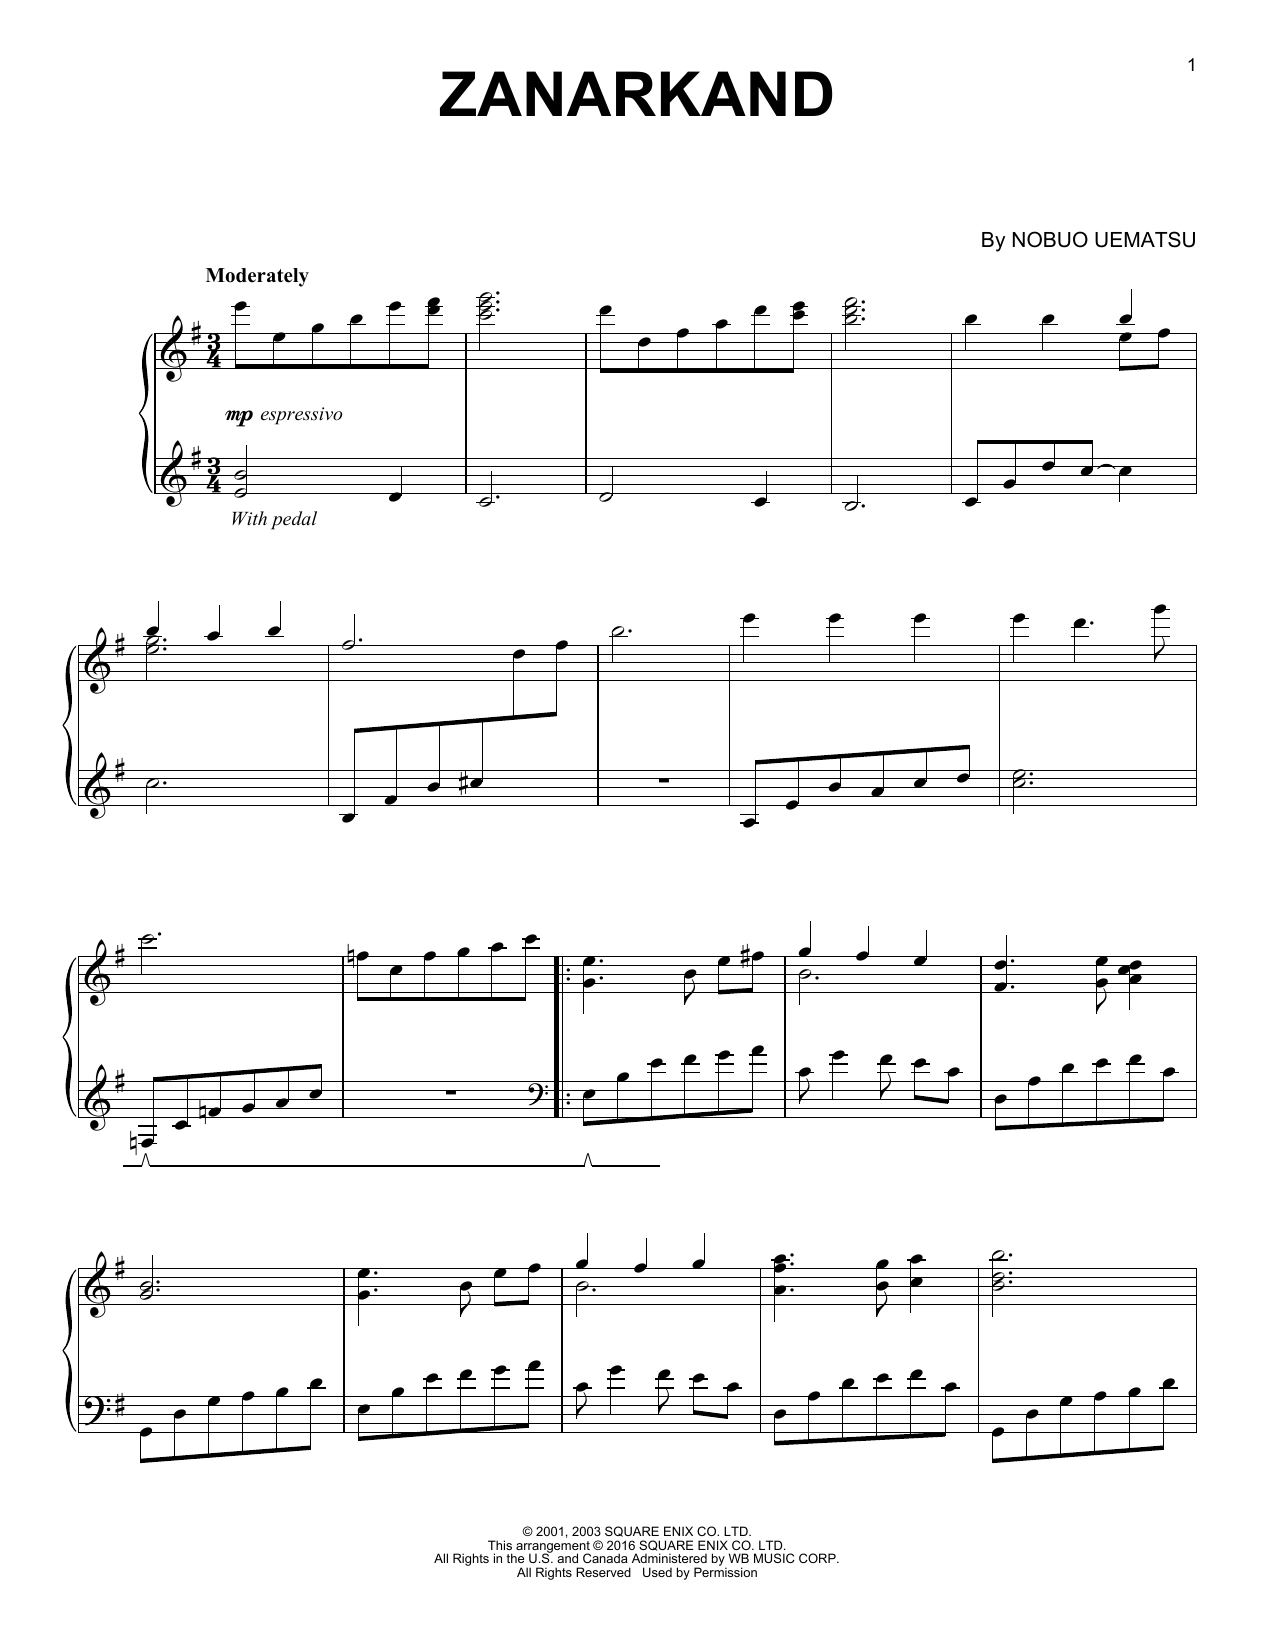 Nobuo Uematsu Zanarkand (from Final Fantasy X) Sheet Music Notes & Chords for Easy Piano - Download or Print PDF